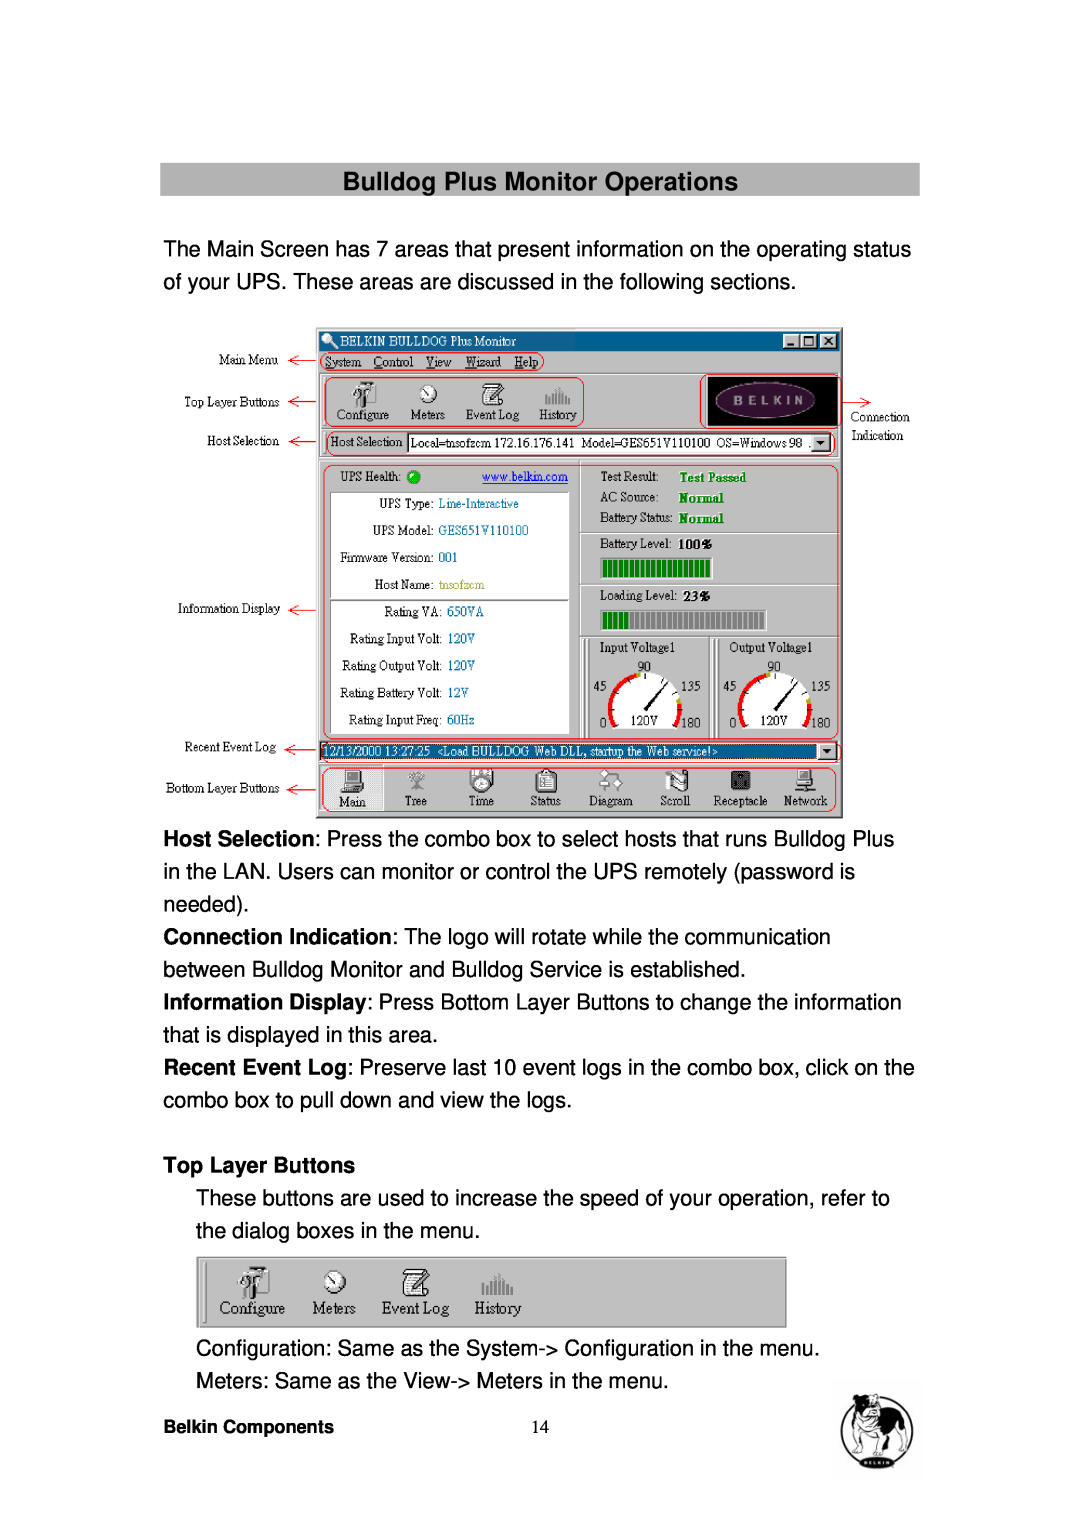 Belkin belkin bulldog plus- shutdown management software for windows Bulldog Plus Monitor Operations, Top Layer Buttons 